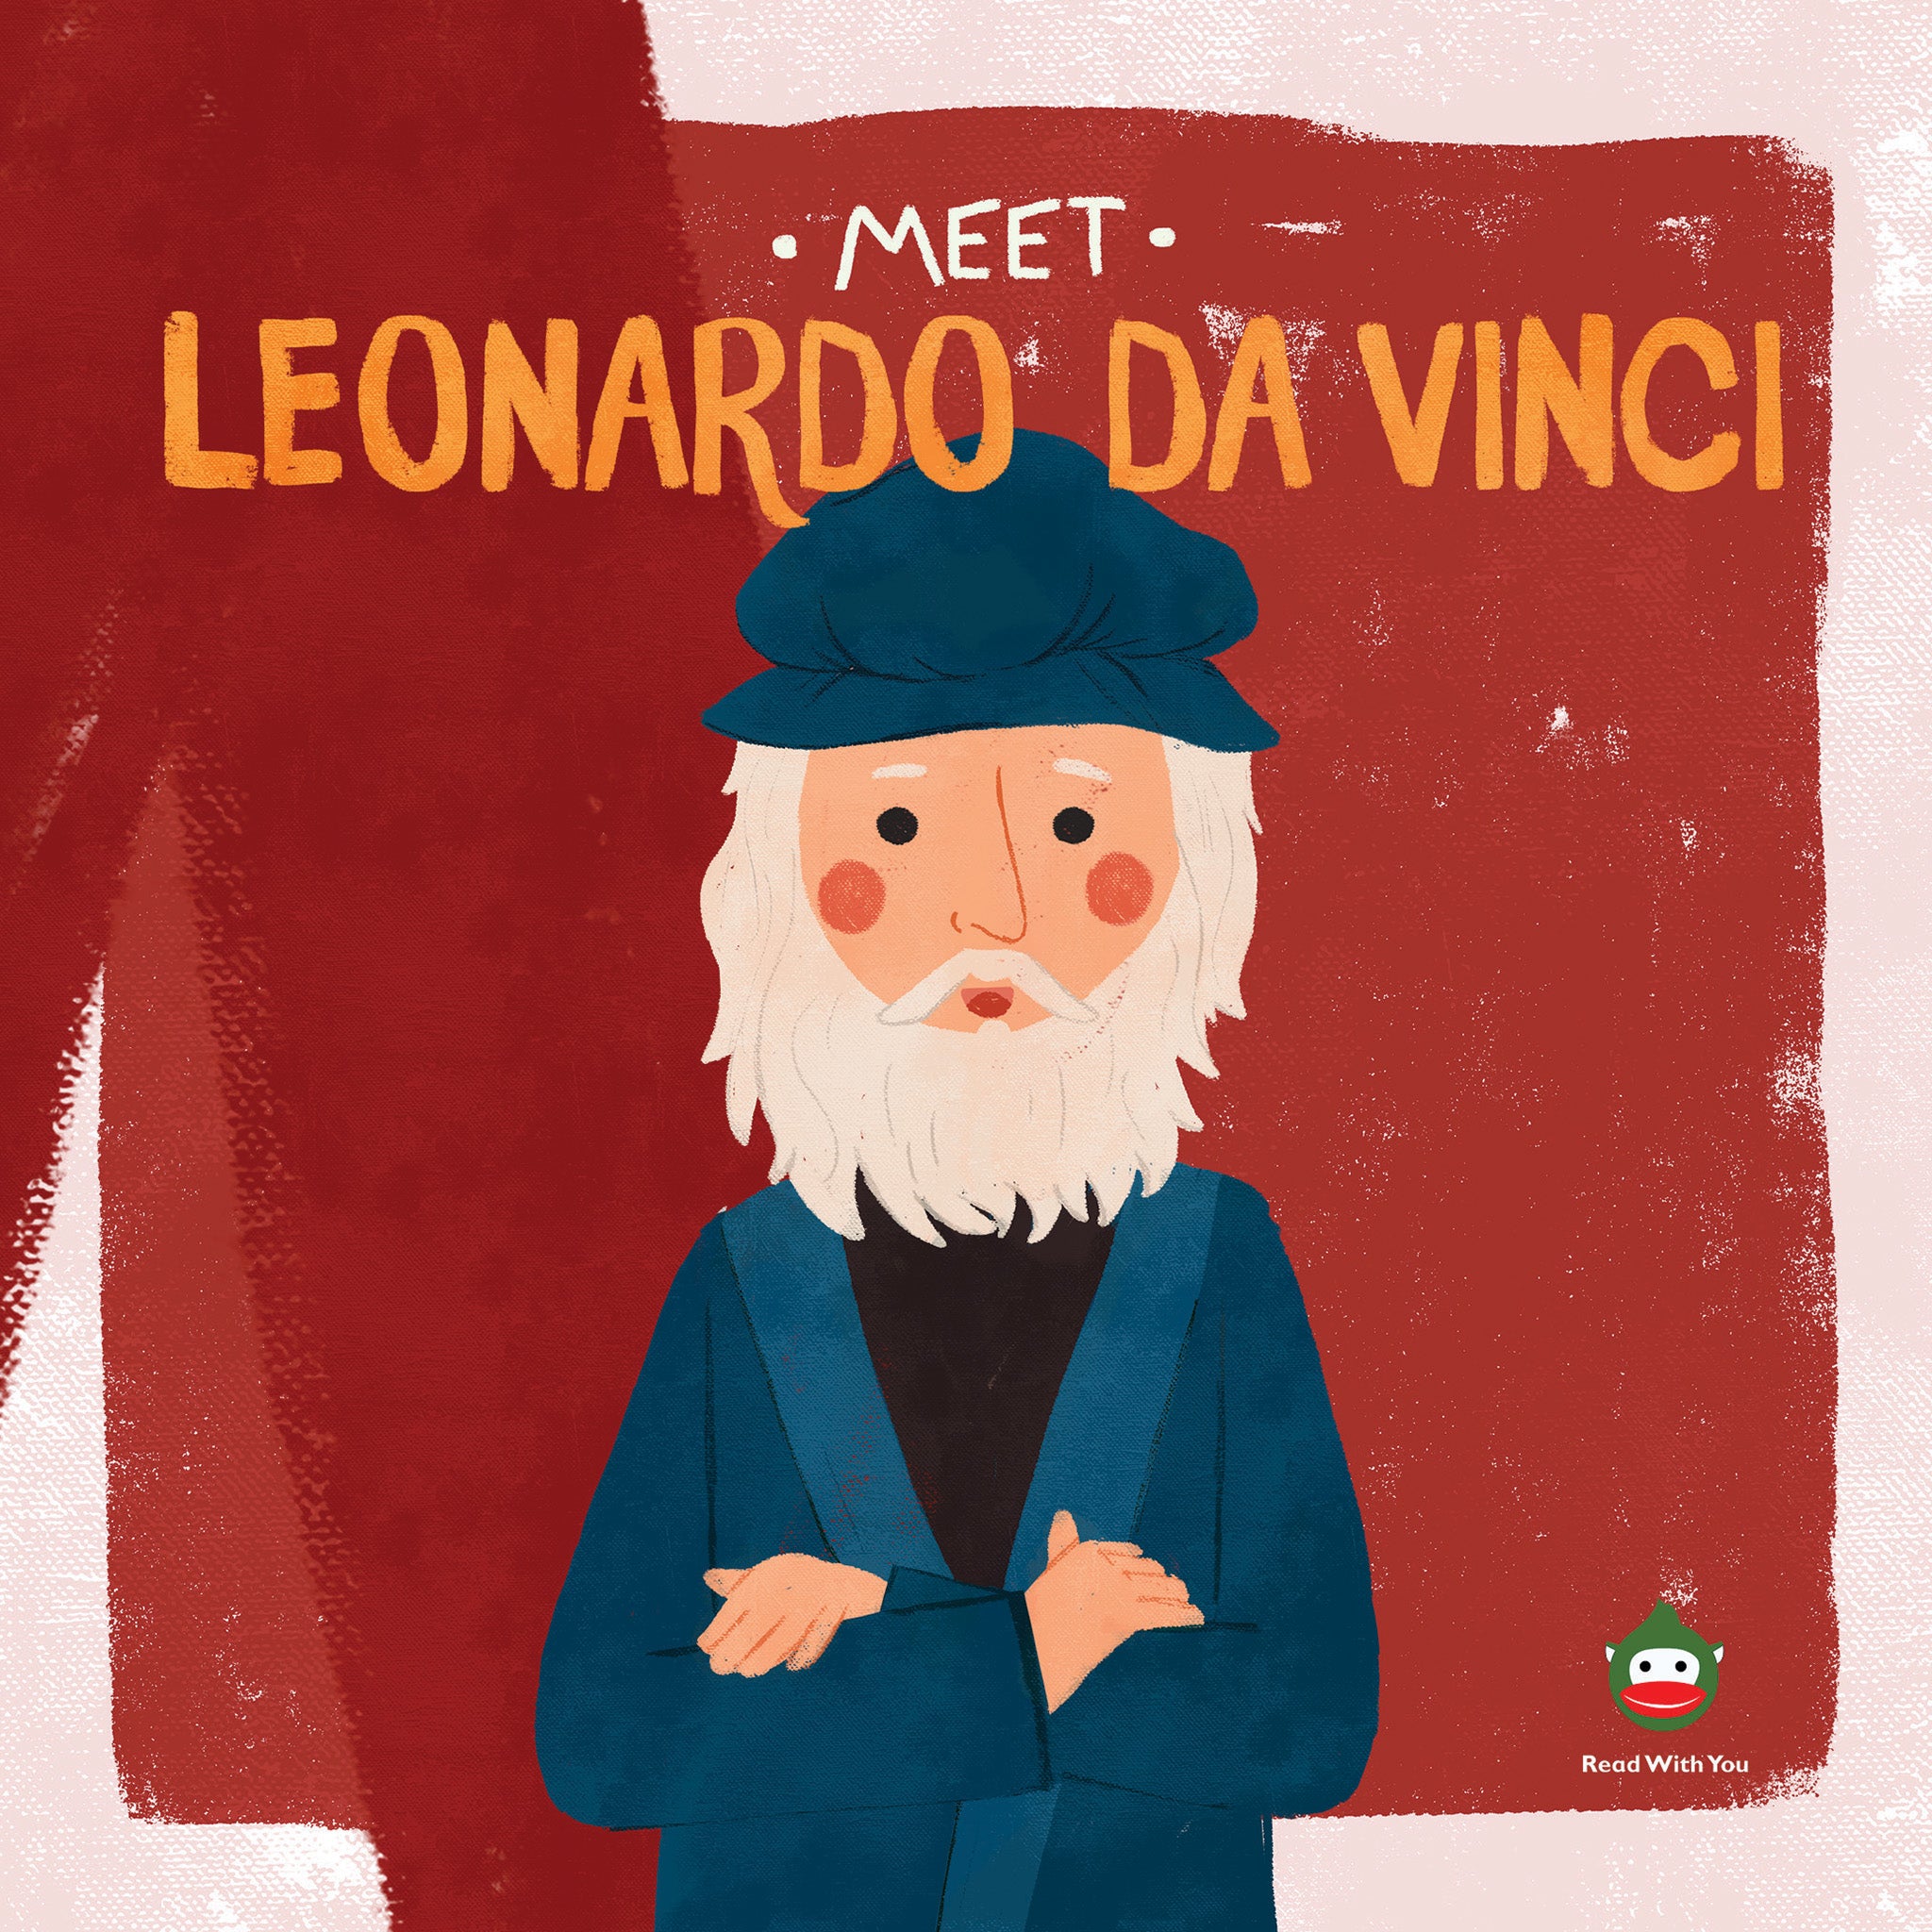 Meet Leonardo With Vinci You Read da –